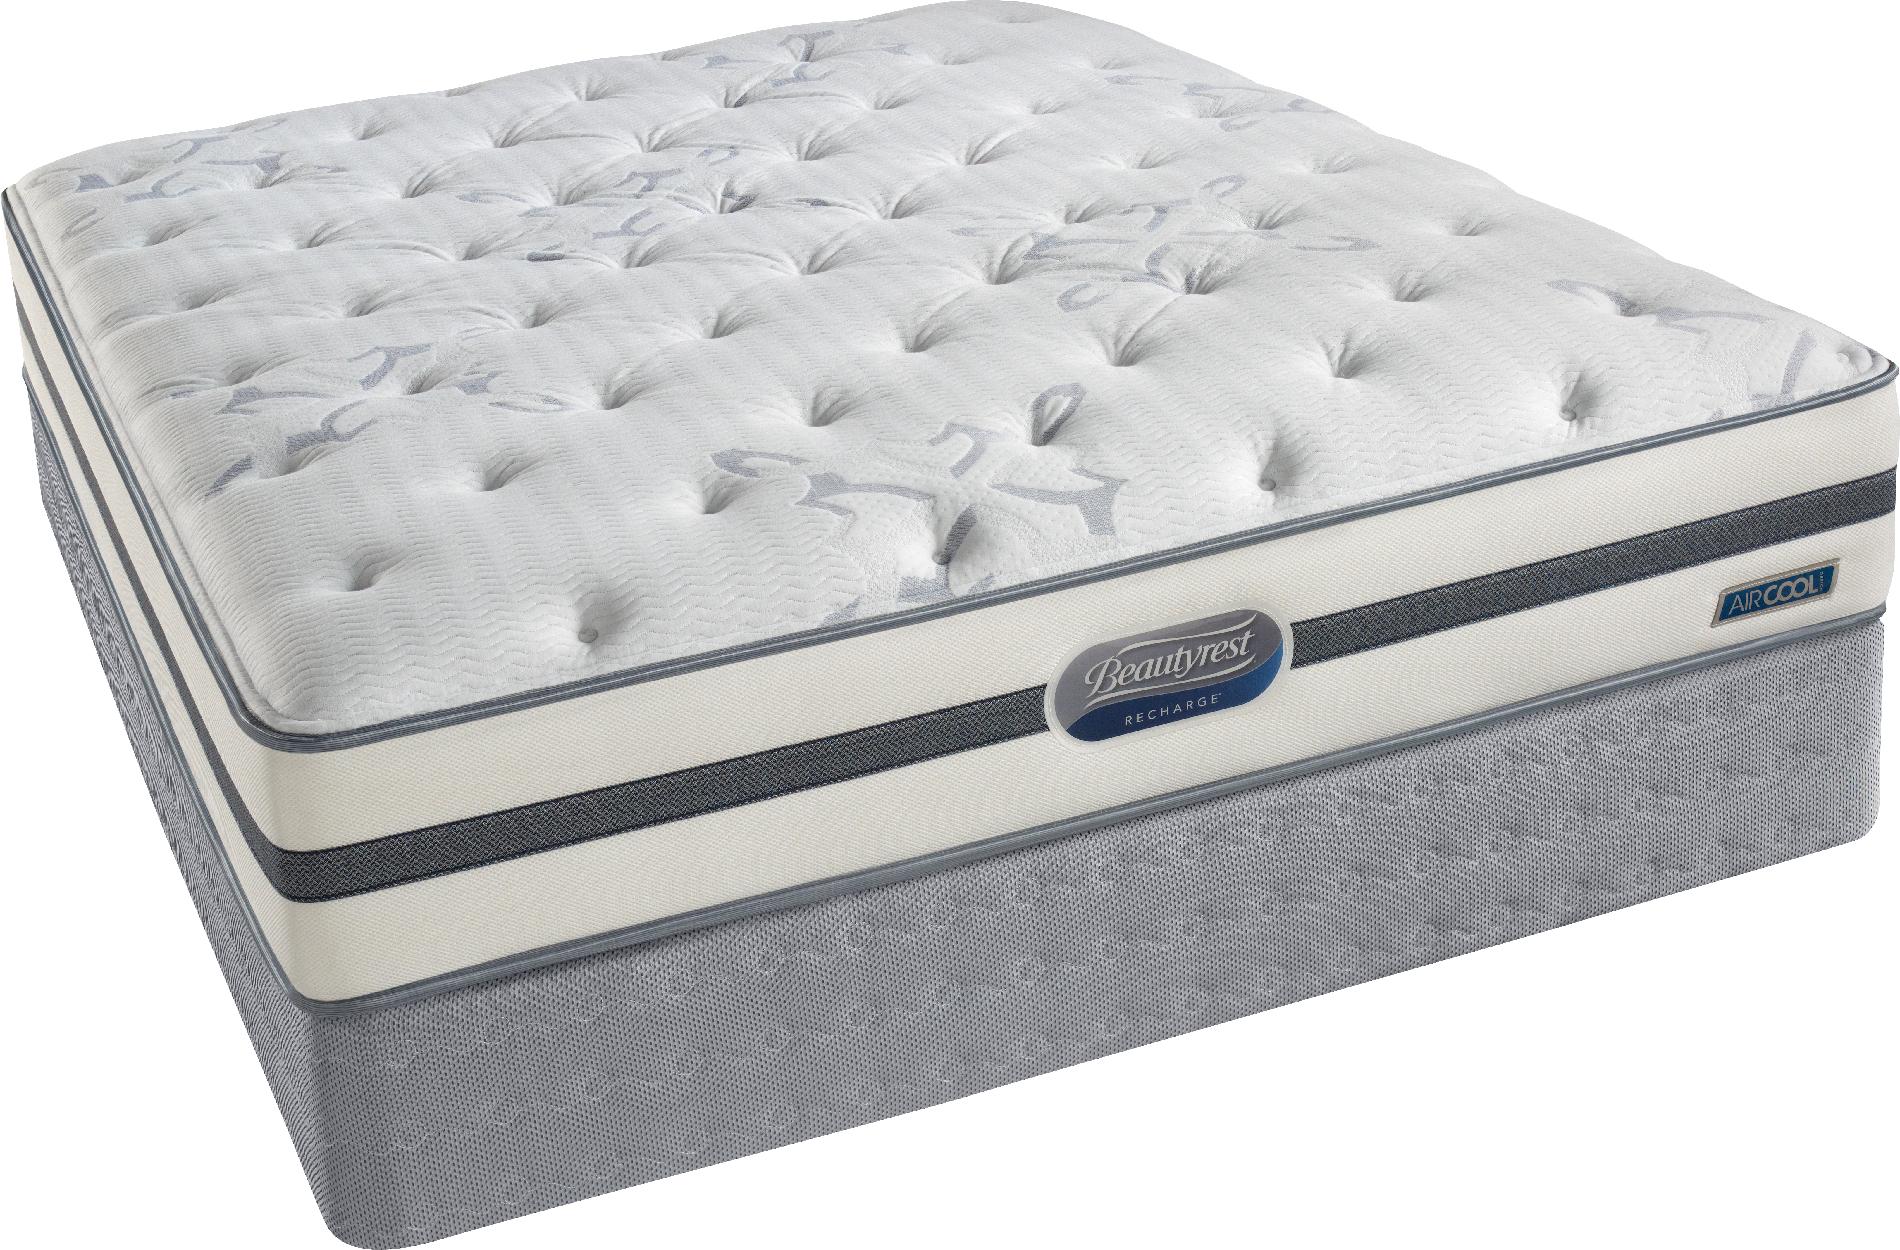 mattress set on sale at sears